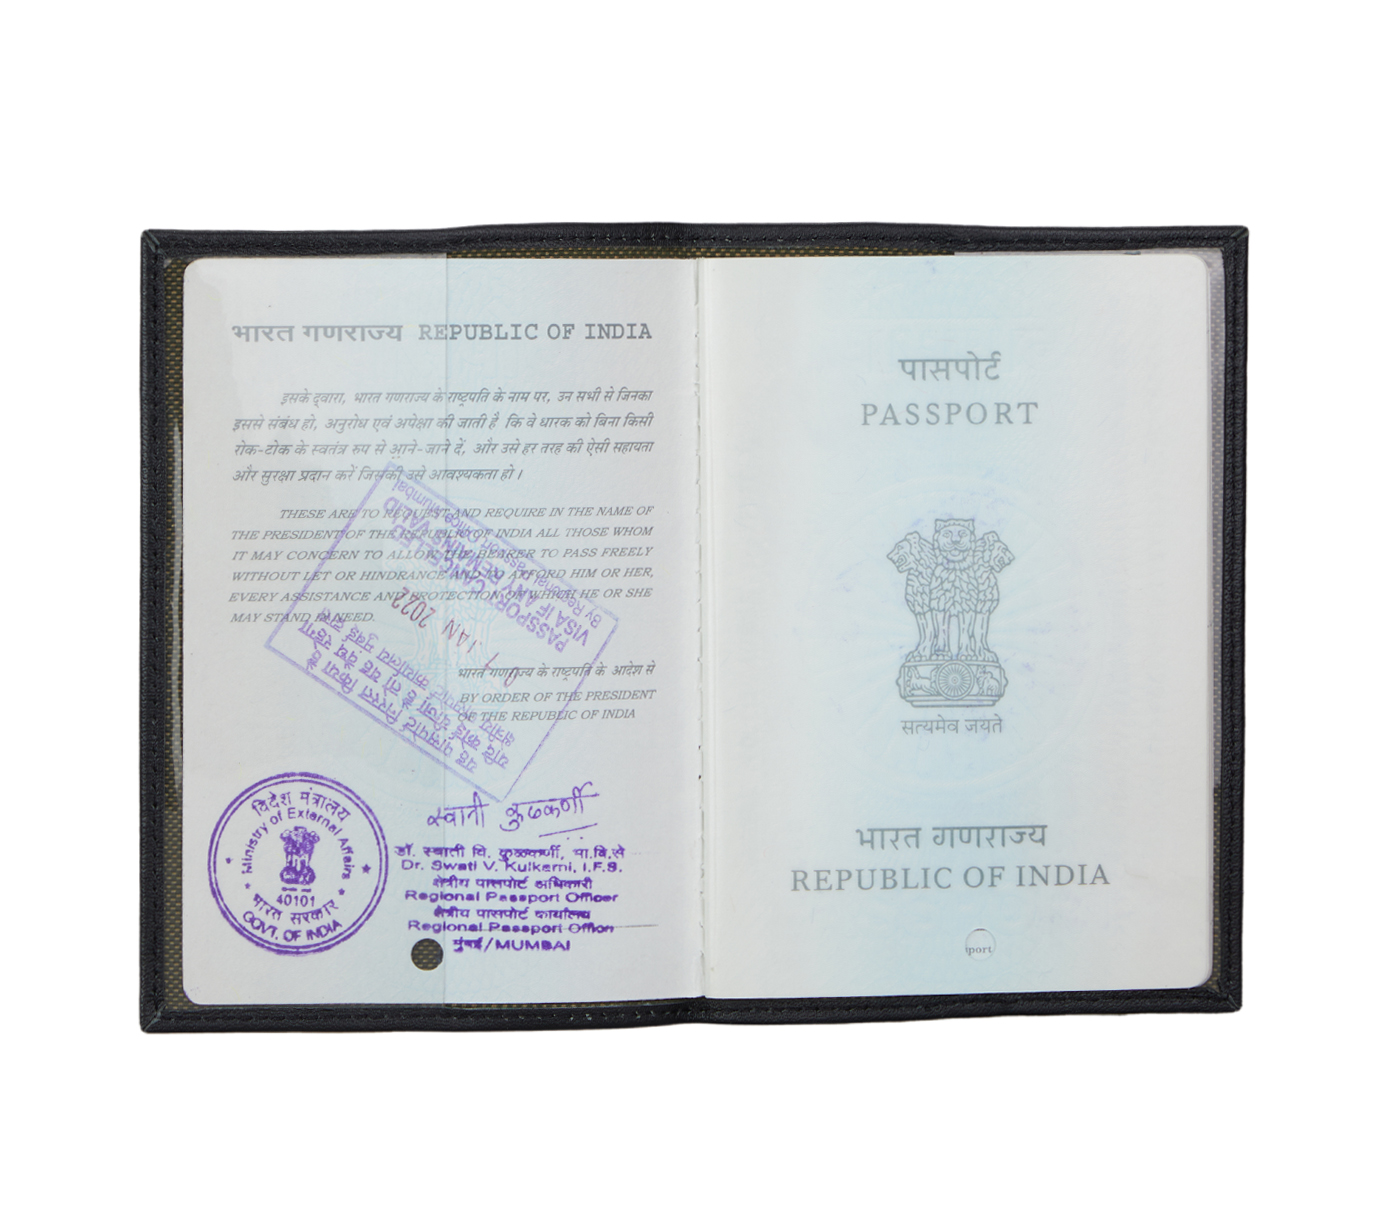 W73--Passport cover in Genuine Leather - Black